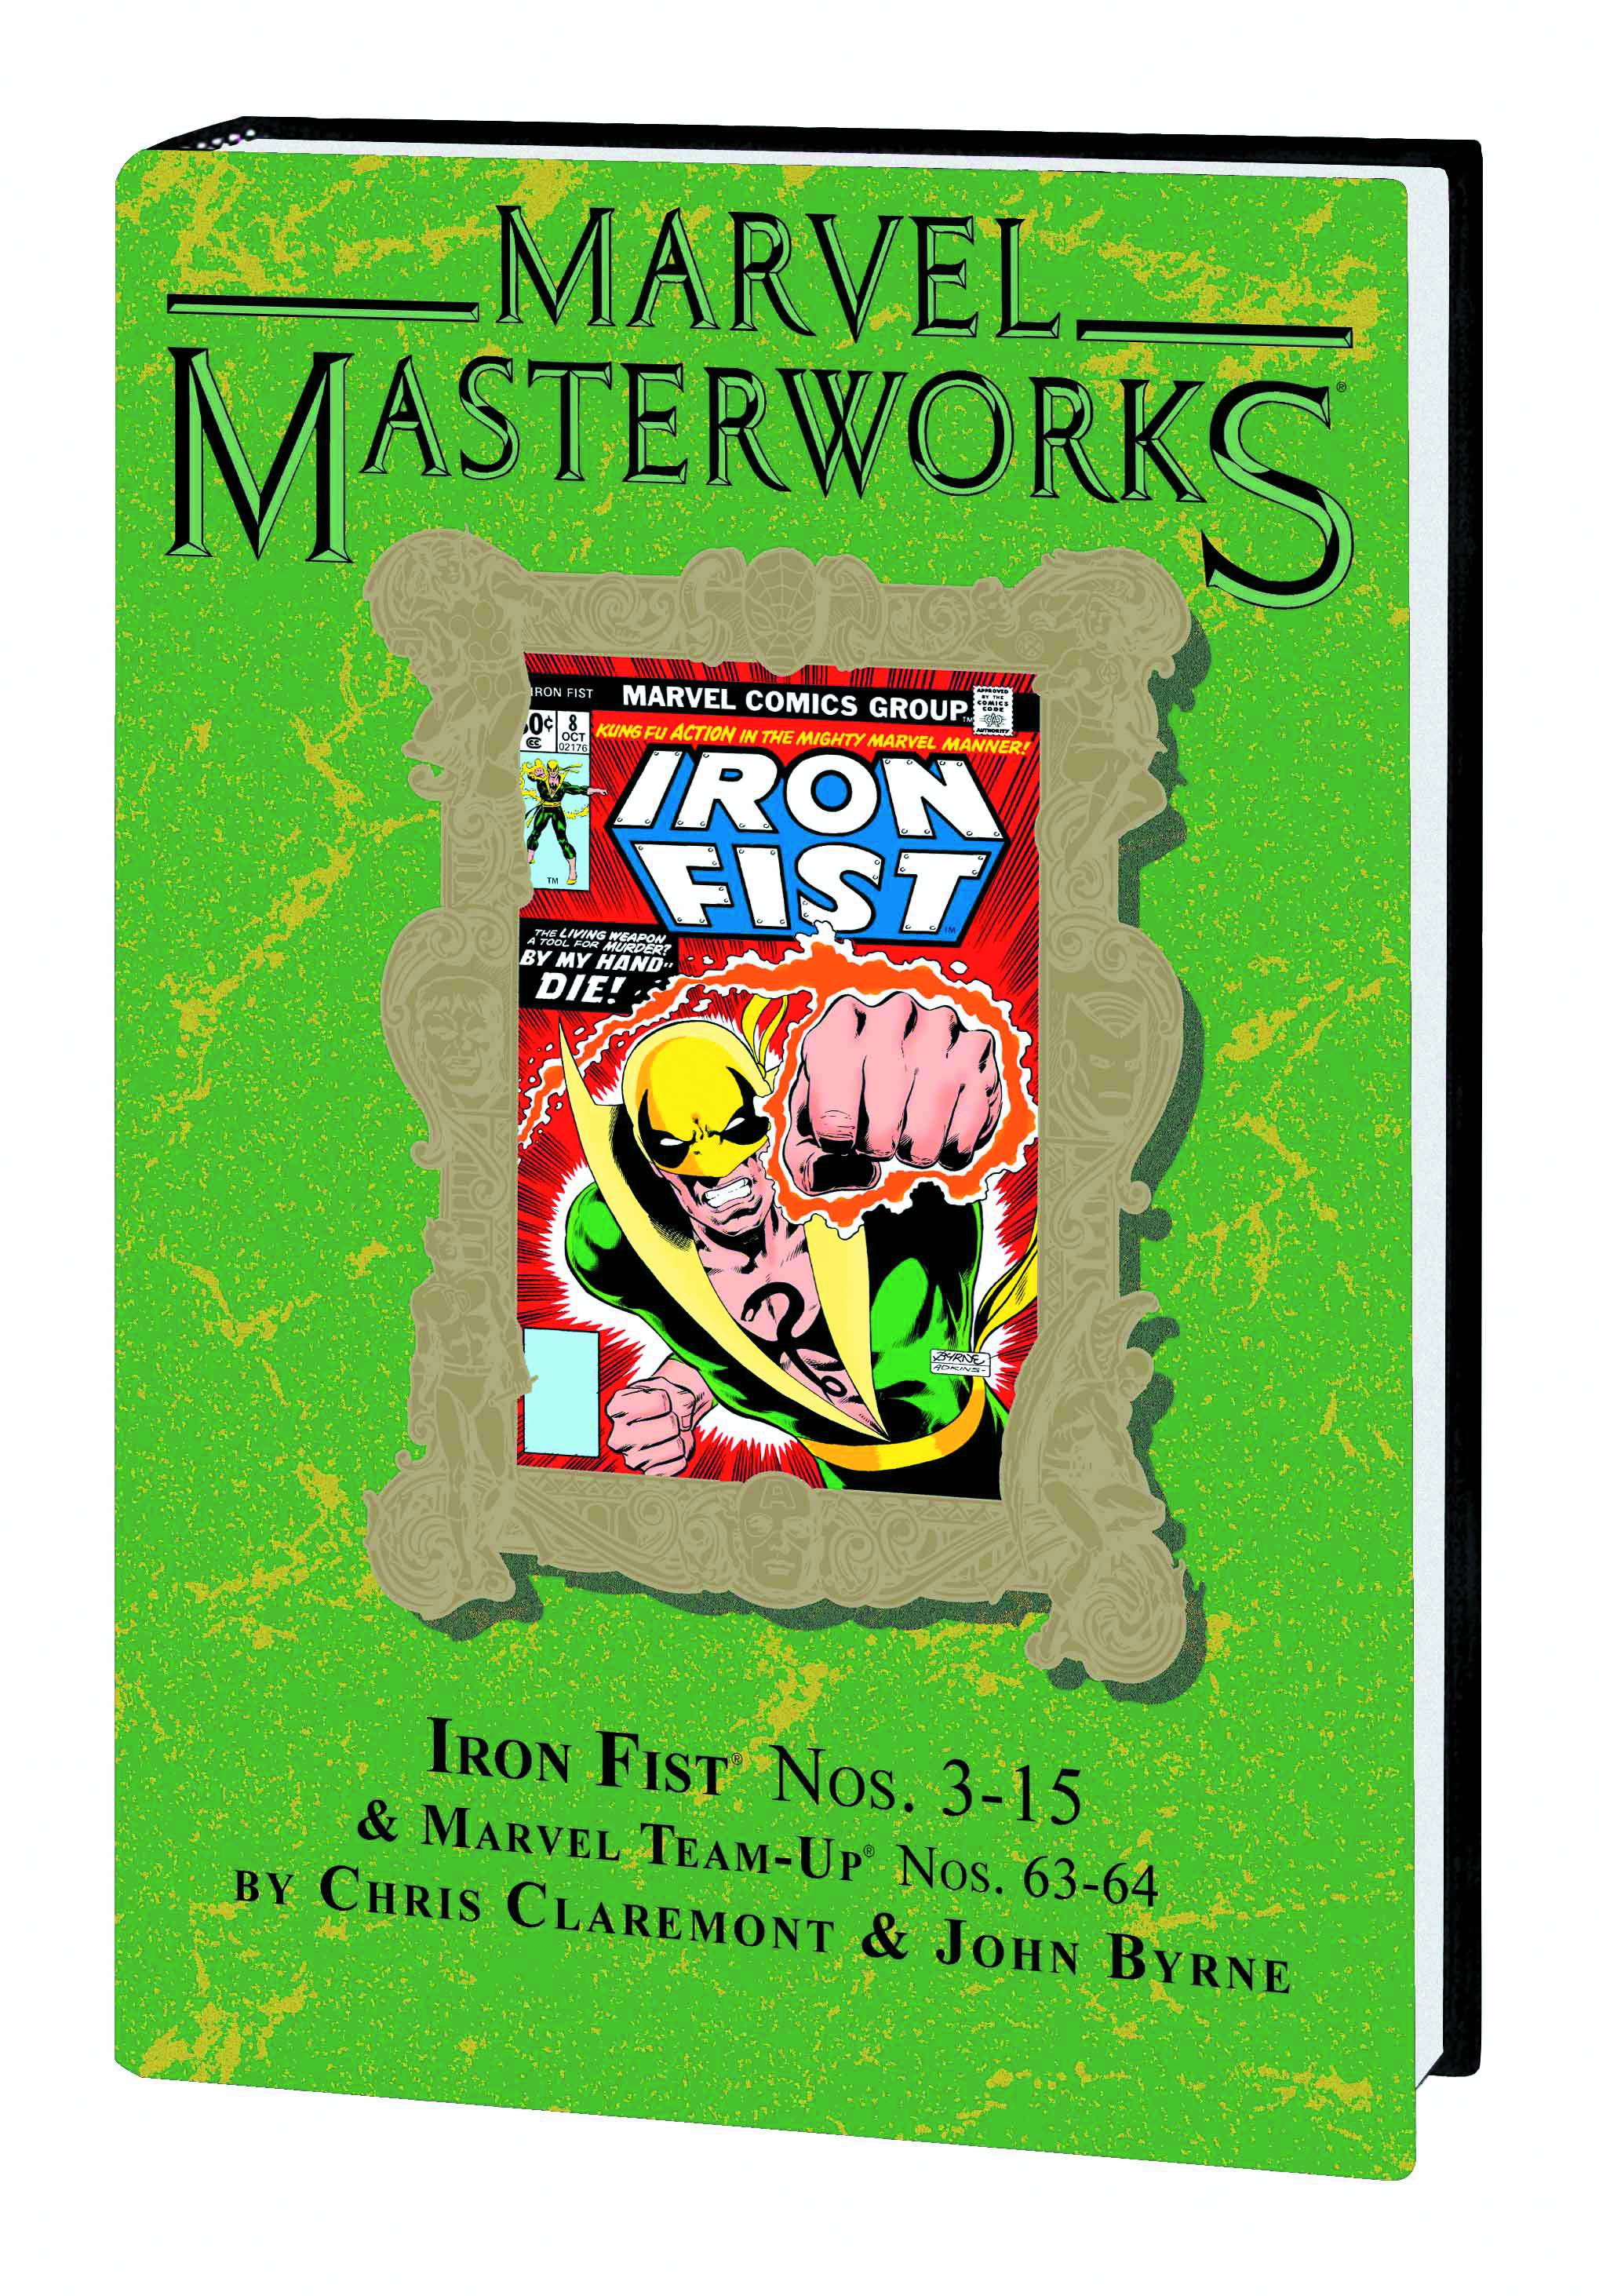 Marvel Masterworks Iron Fist Hardcover Volume 2 Direct Market Edition Edition 185